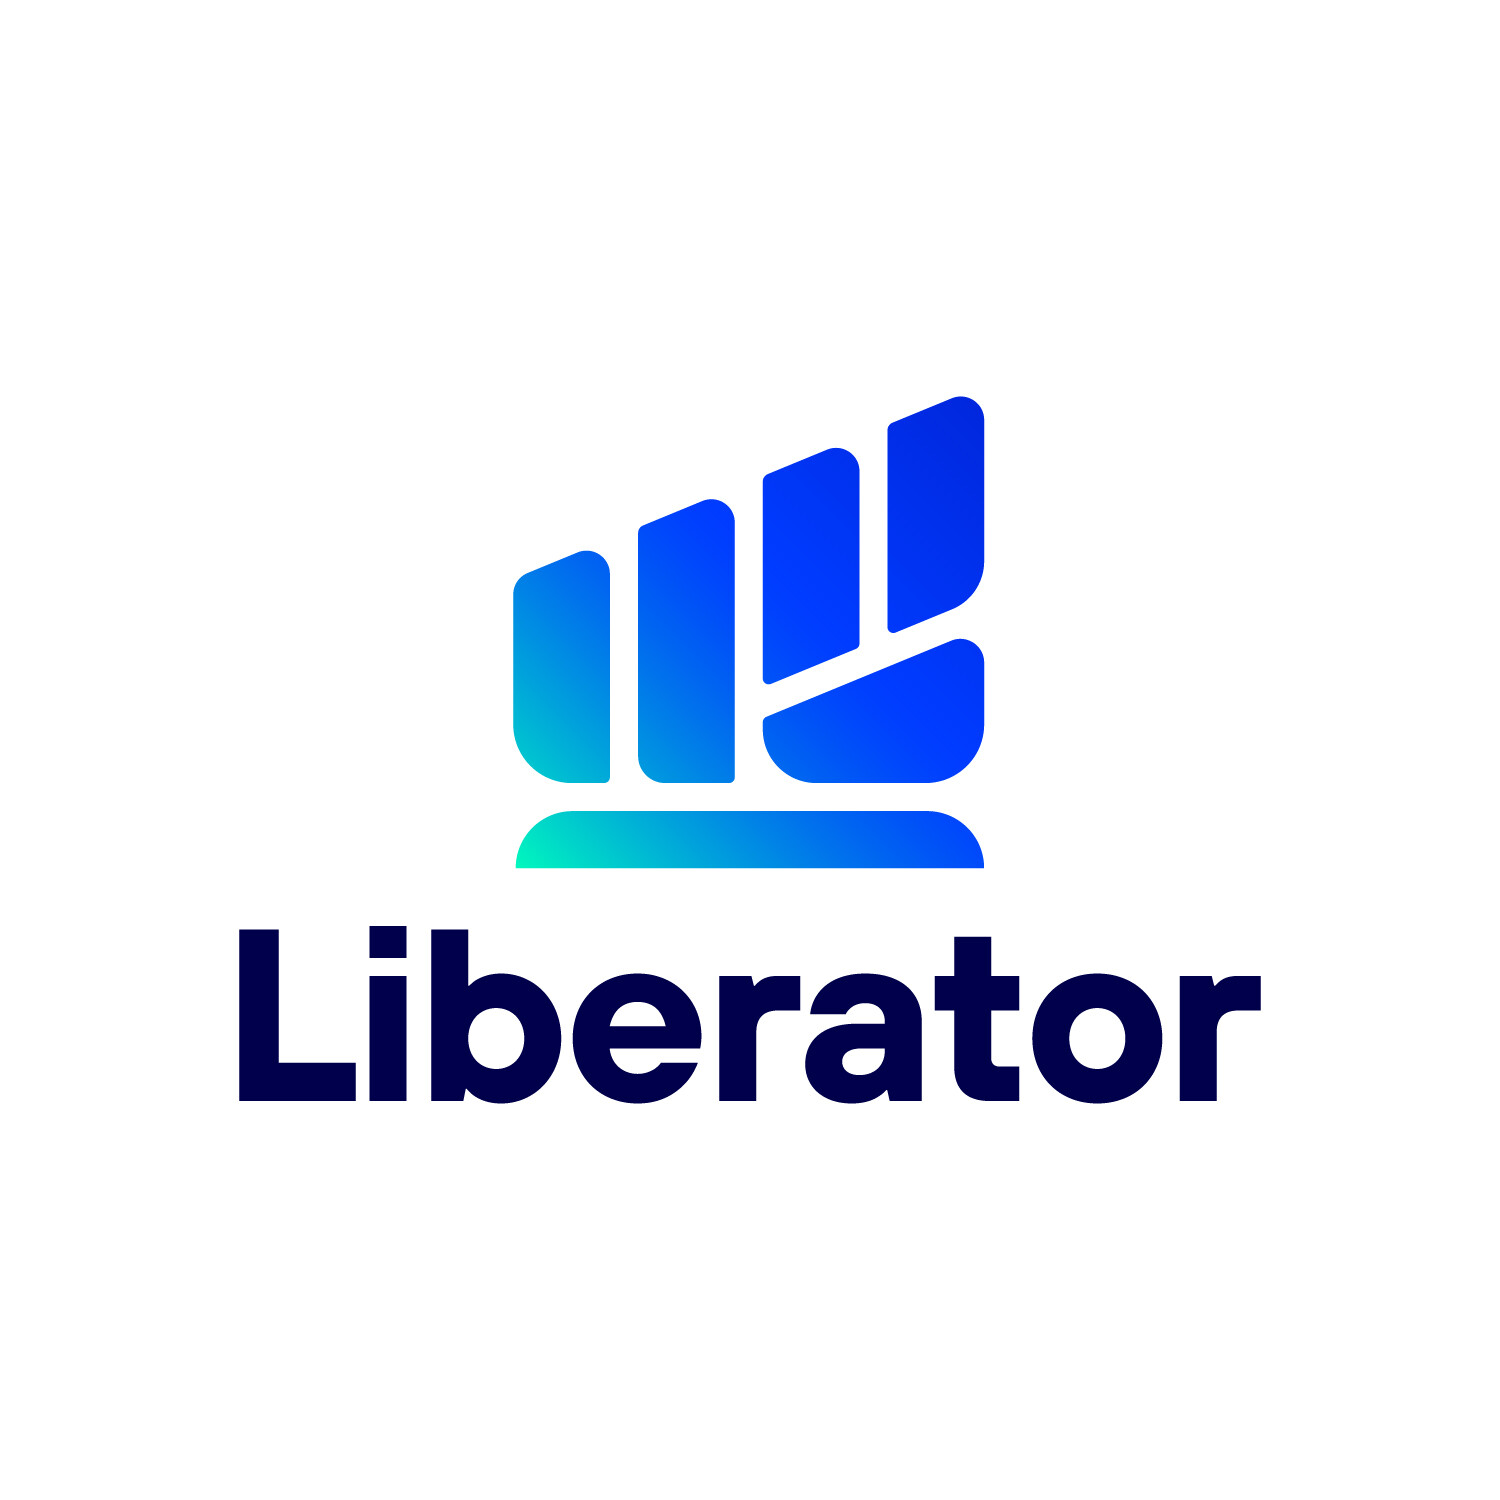 Liberator จับมือ "Super Trader" จัดกิจกรรม "The Futures Trade Class" สอนเทรด TFEX ฟรีครั้งแรก! ปูทางสู่ Liberator Academy เสิร์ฟความรู้ดีๆ ต่อเนื่อง